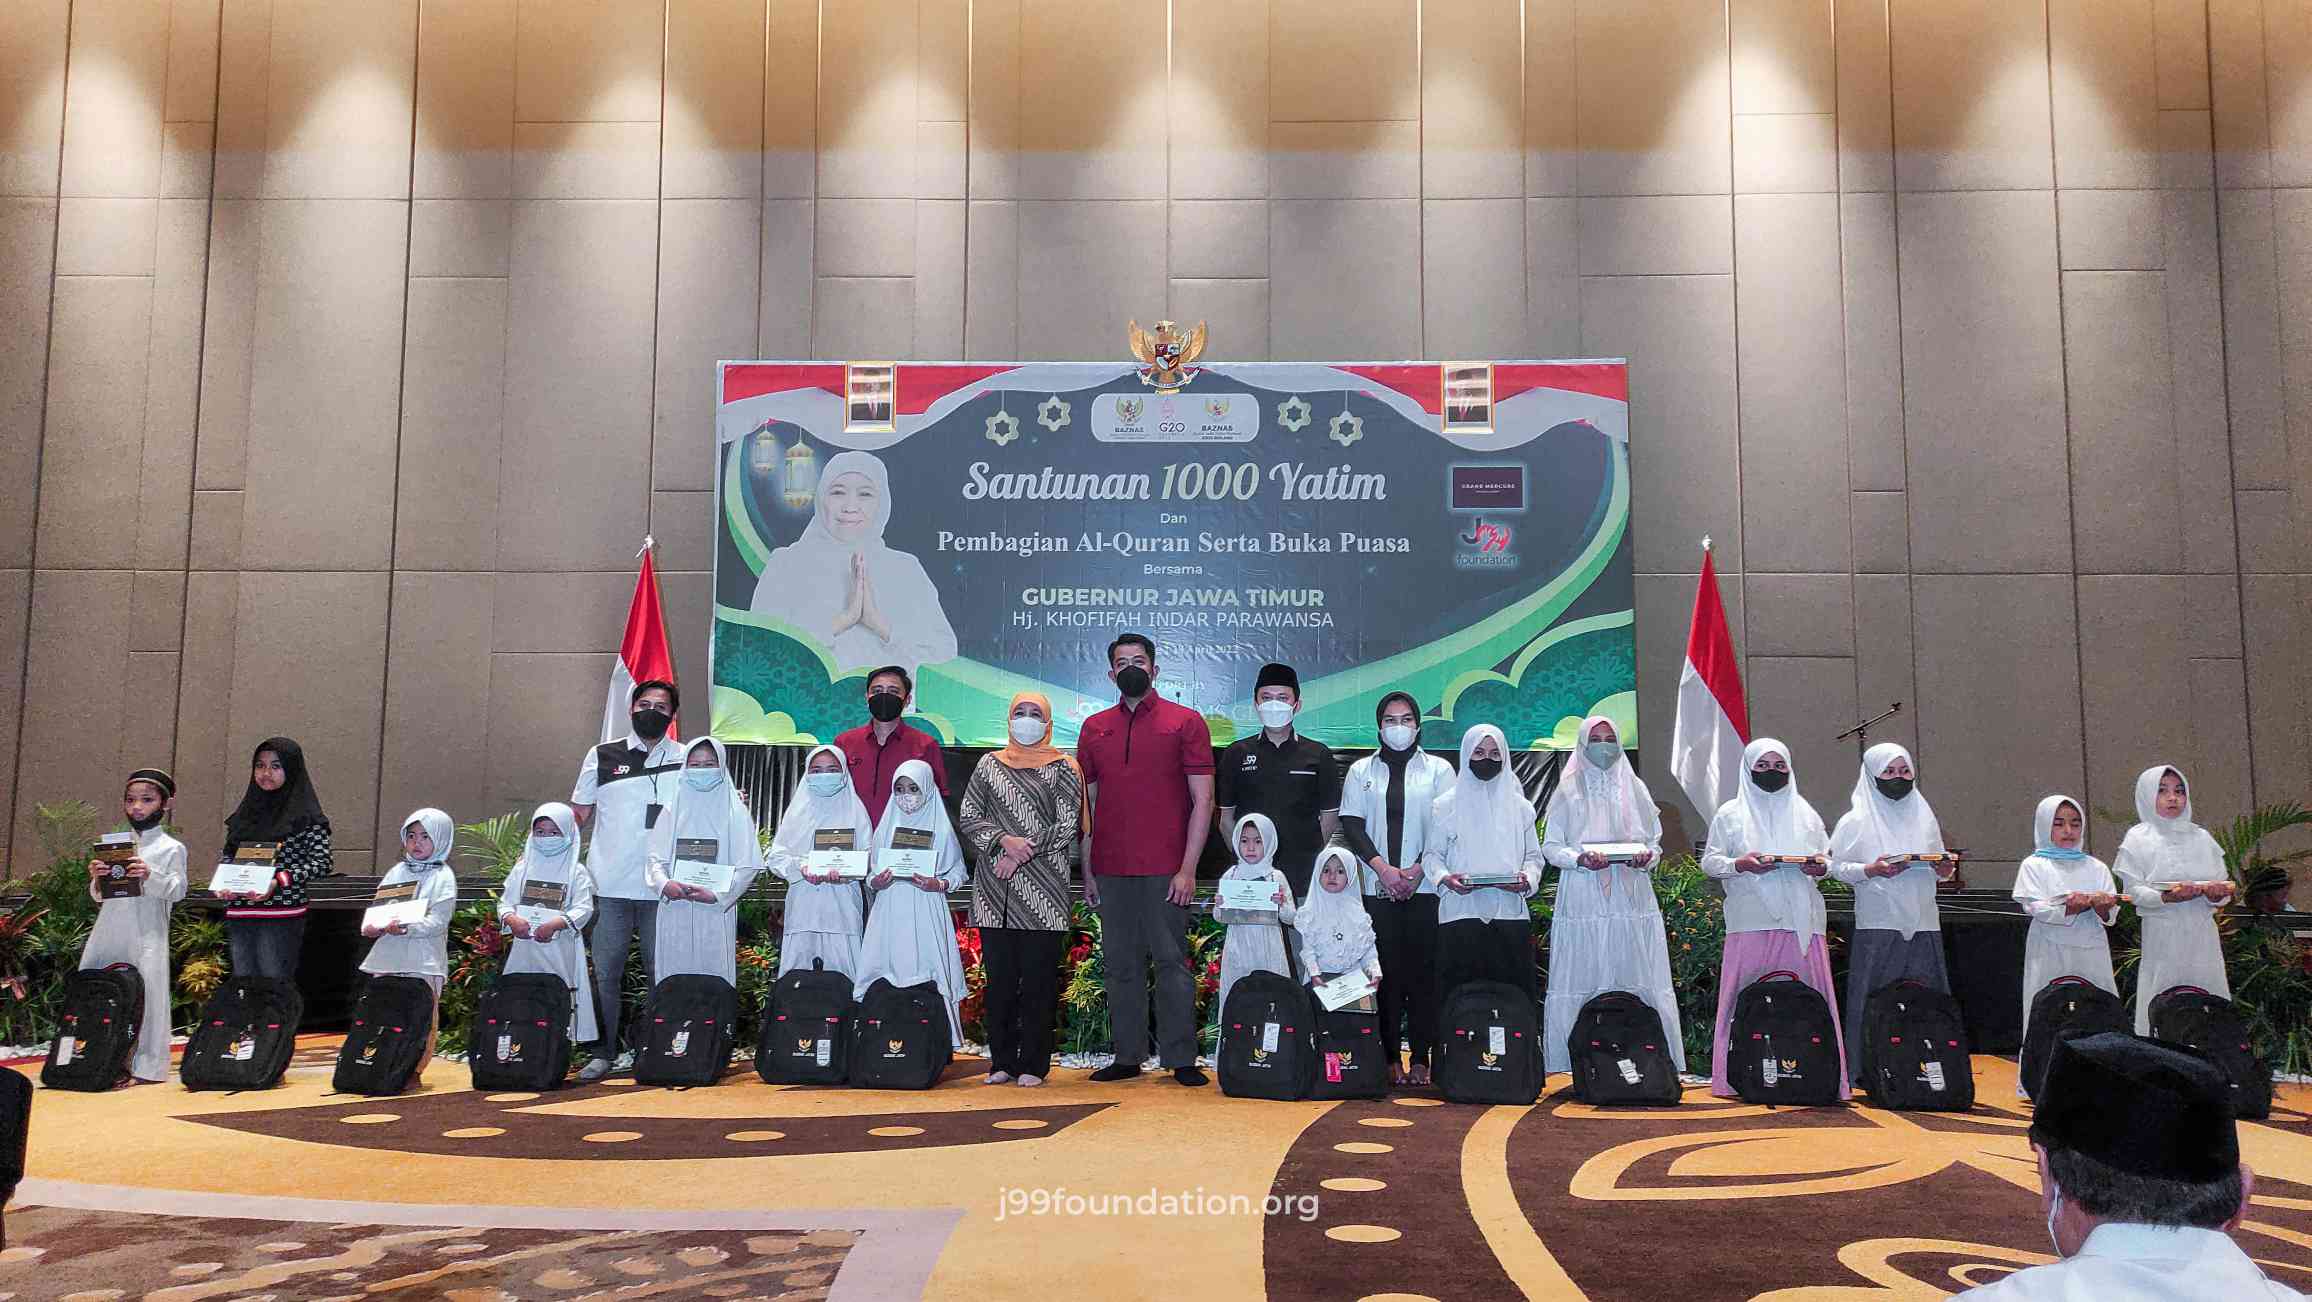 Grand Mercure Malang Mirama Bersama Baznas dan J99 Foundation Berbagi Bersama 1000 Anak Yatim dan Dhuafa